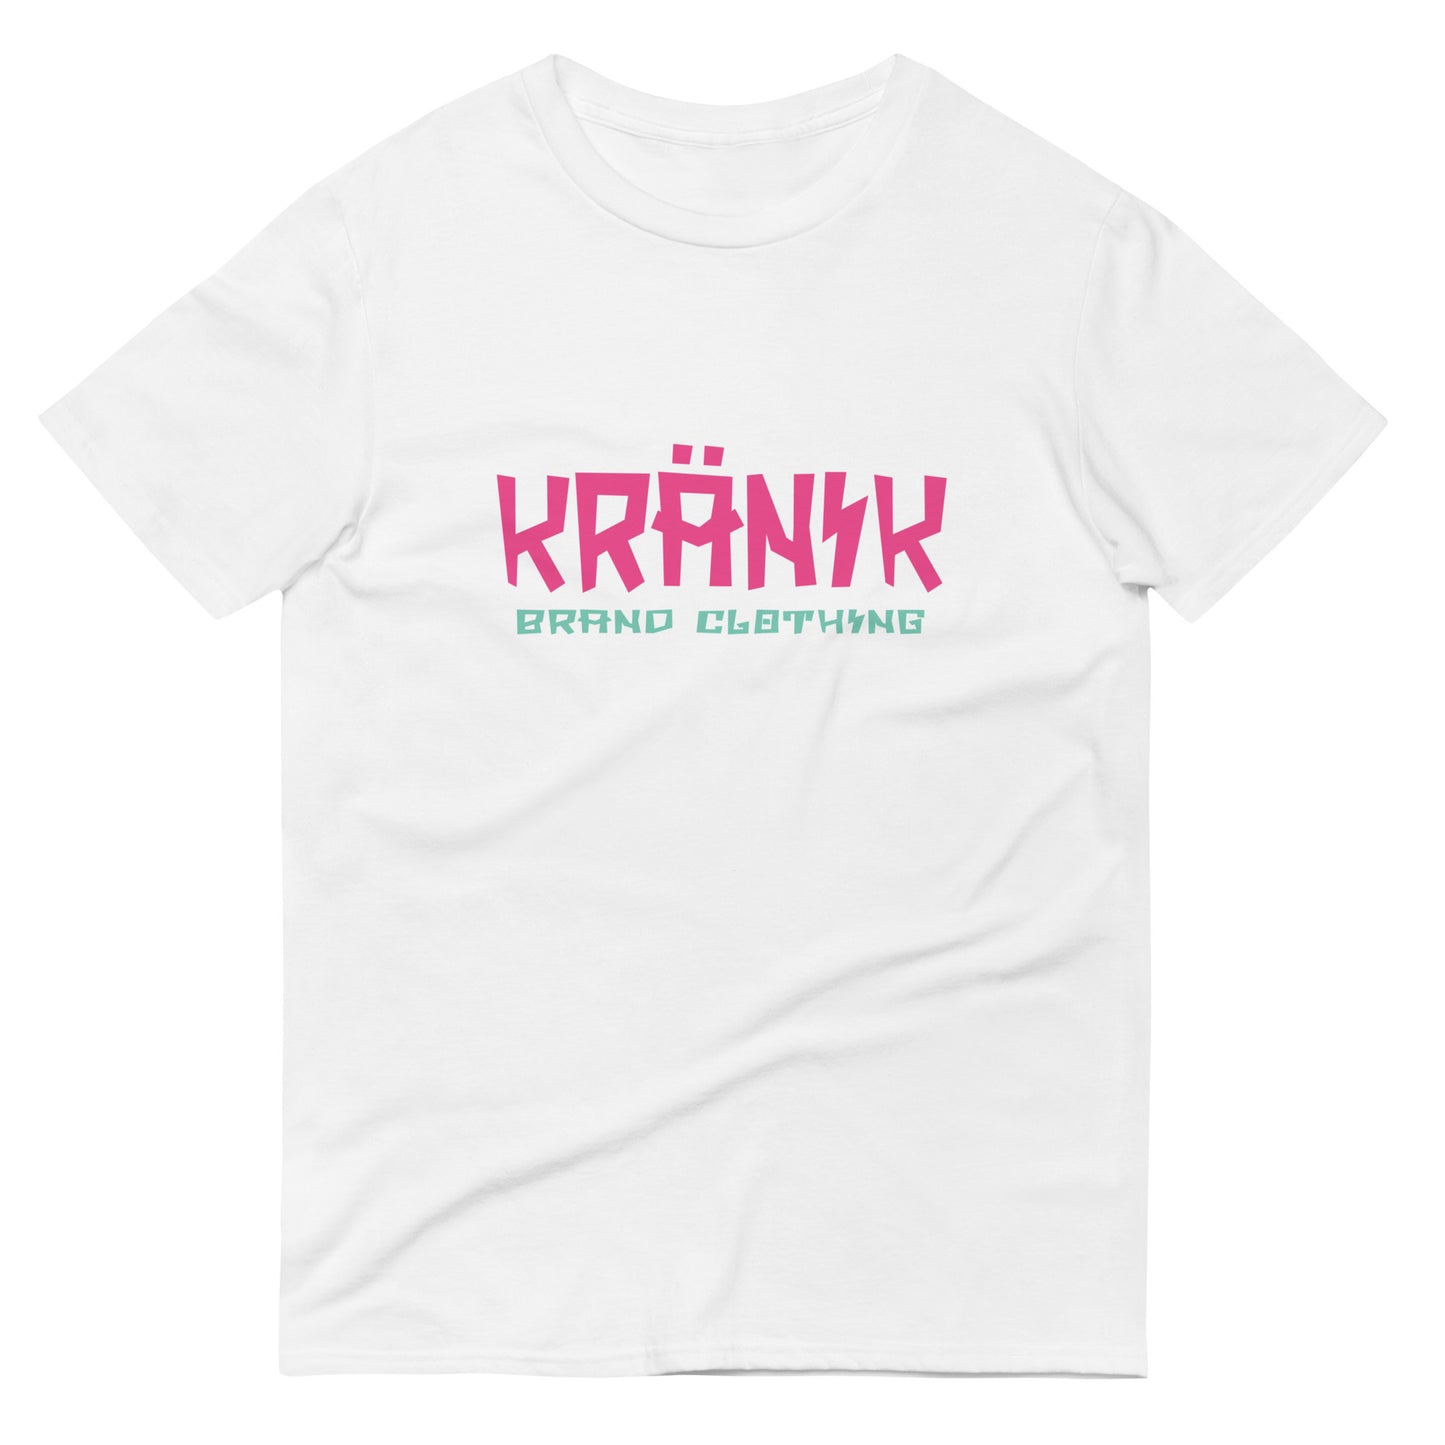 (1) Kranik Shirt - Summer Collection - Short-Sleeve Shirt - Kranik Brand Clothing